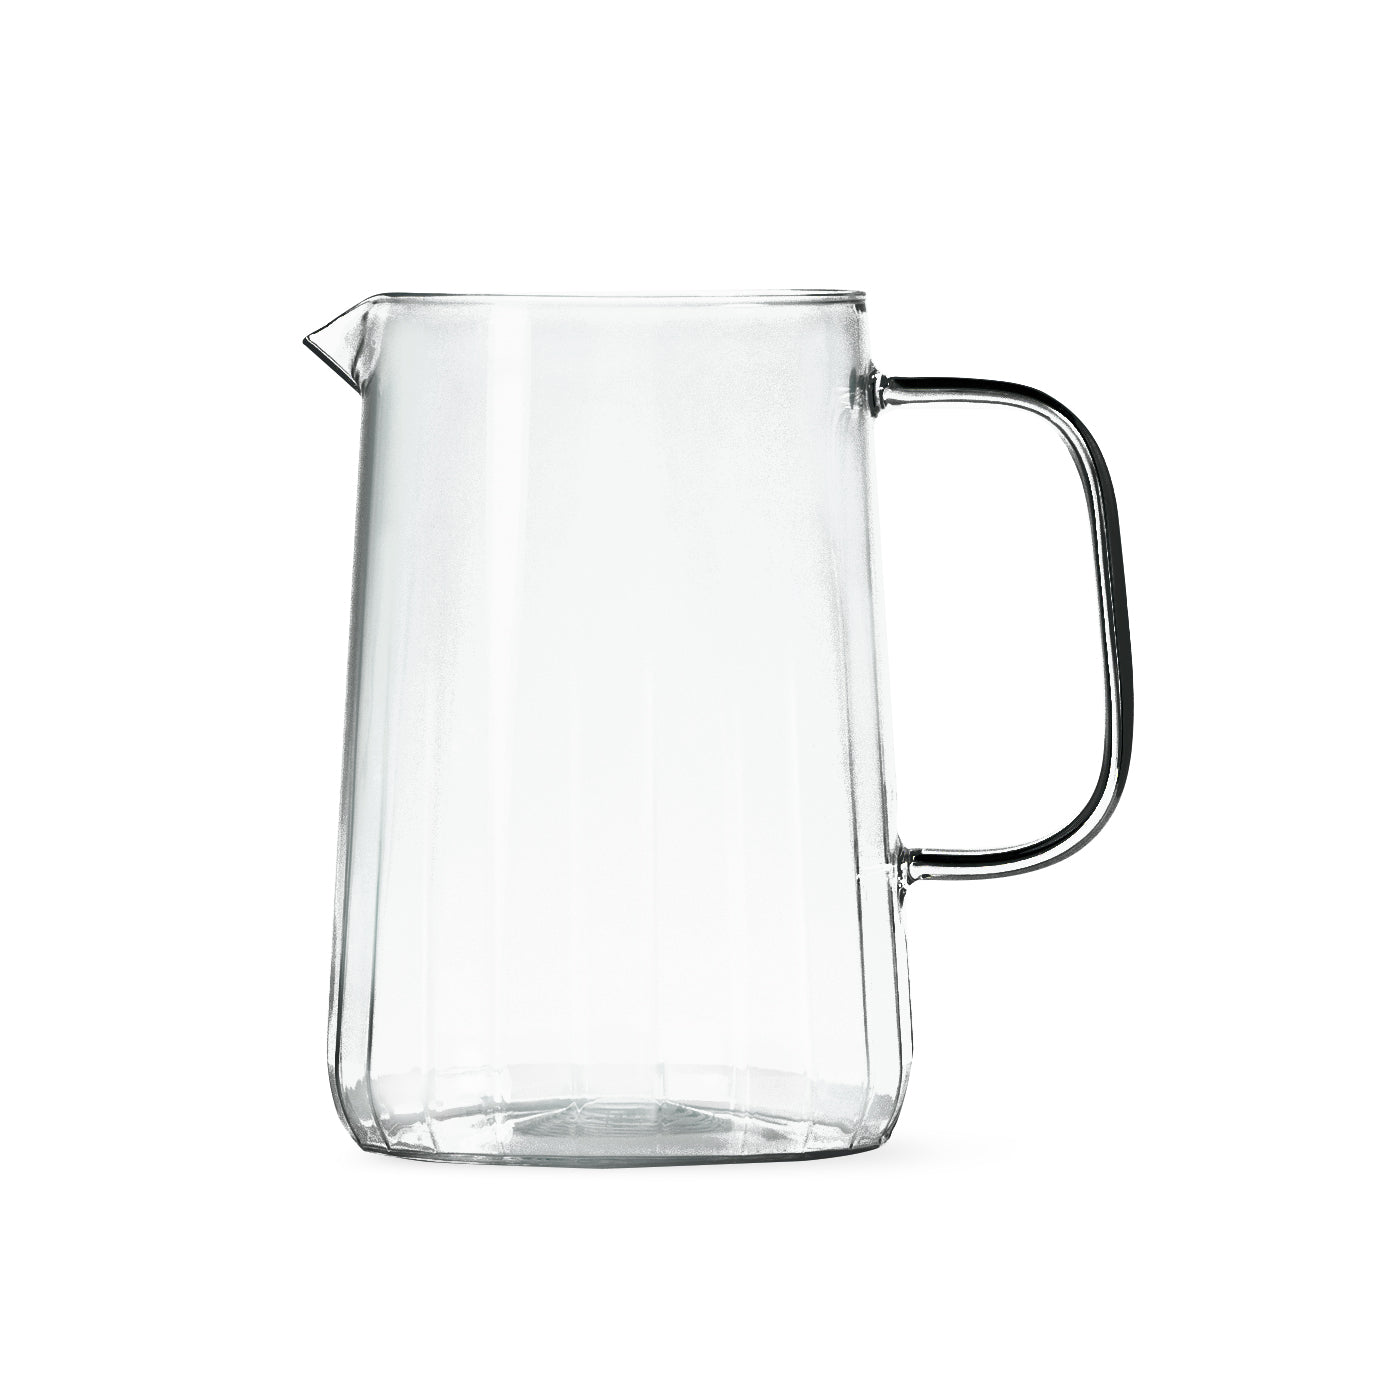 Yod and Co Rivington glass jug design by Blond design studio